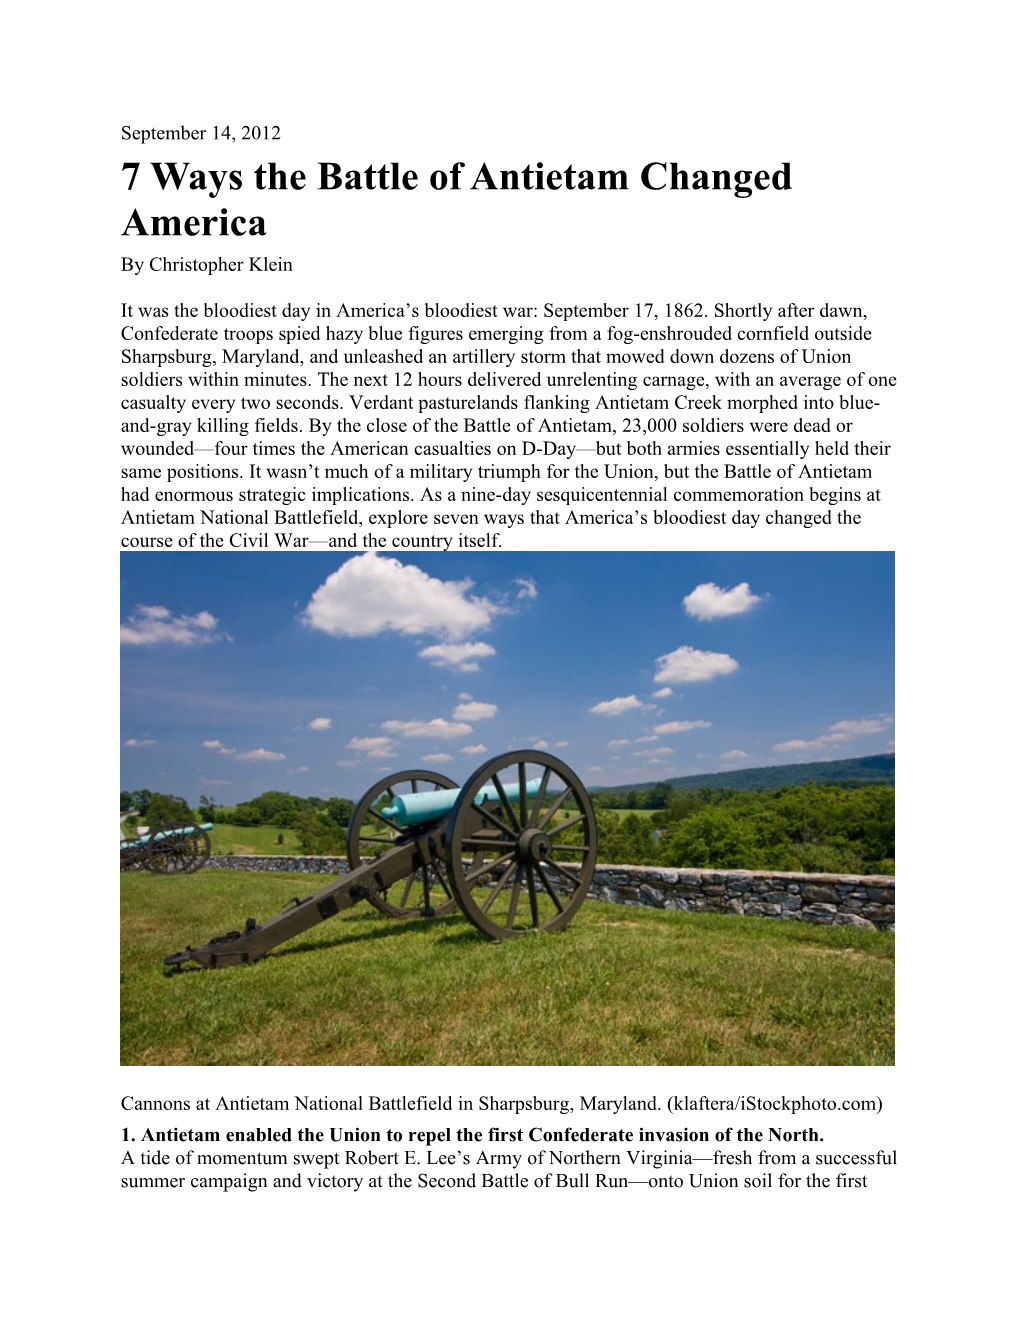 7 Ways the Battle of Antietam Changed America